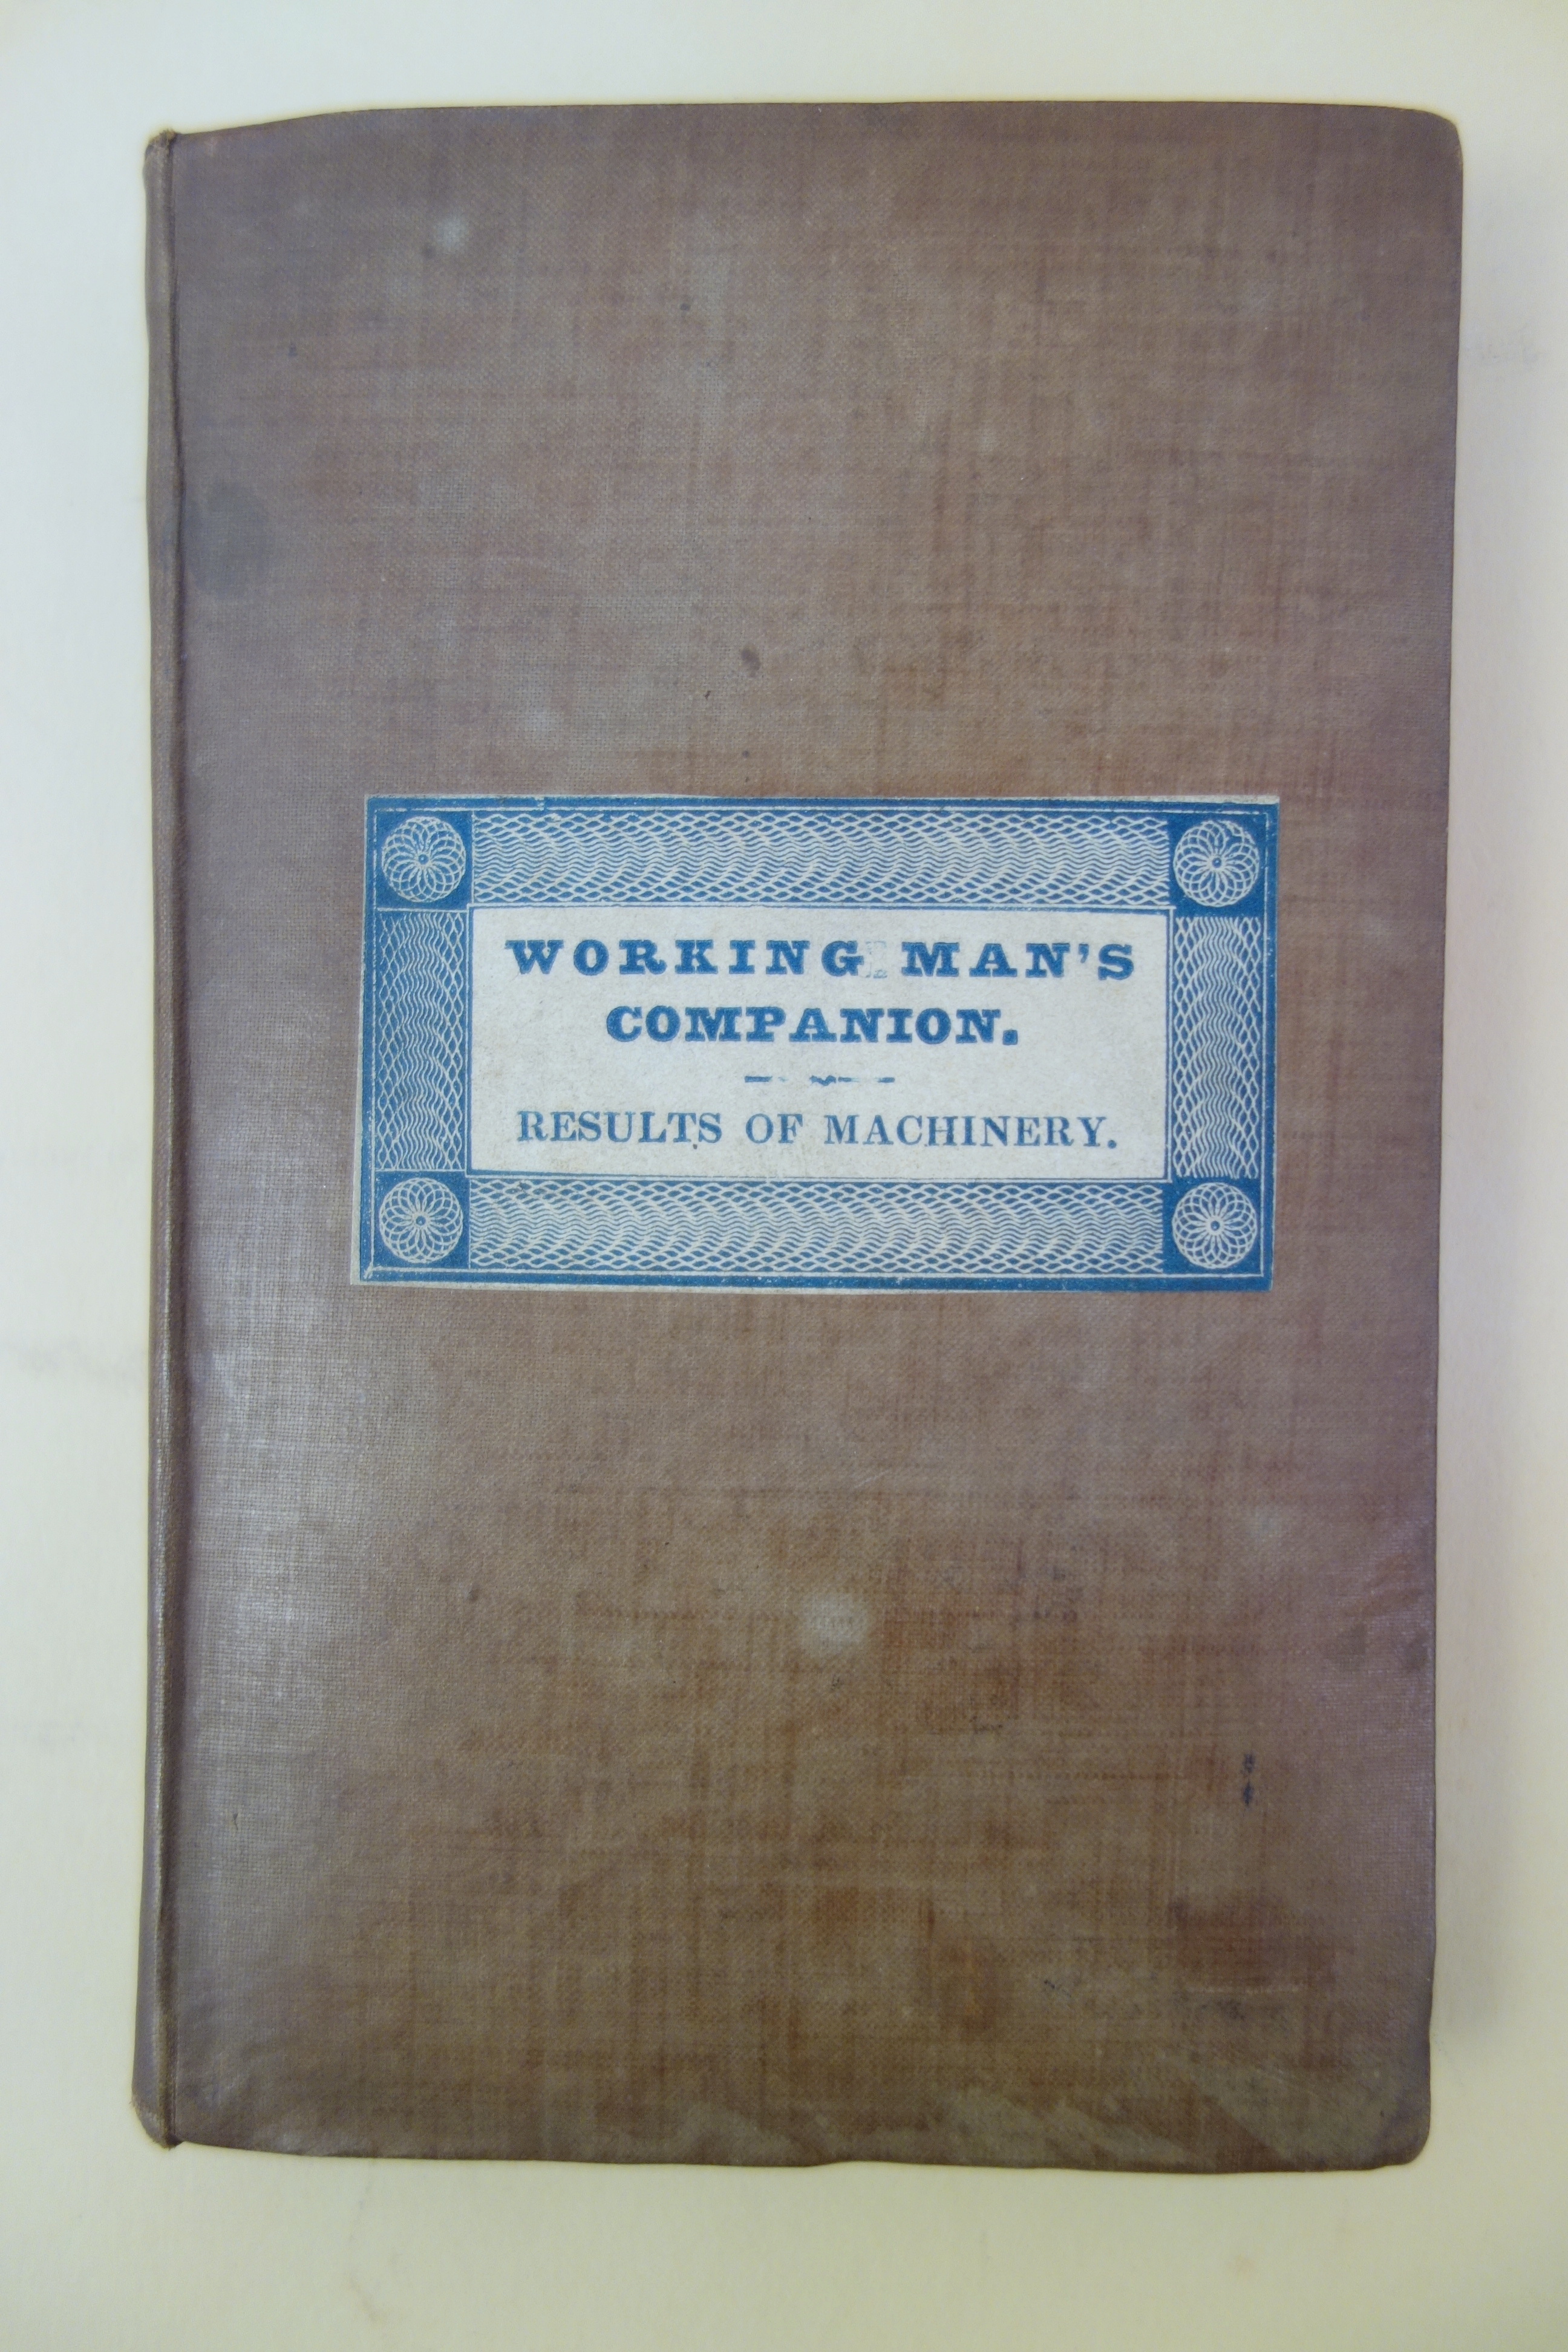 Working Man's Companion binding